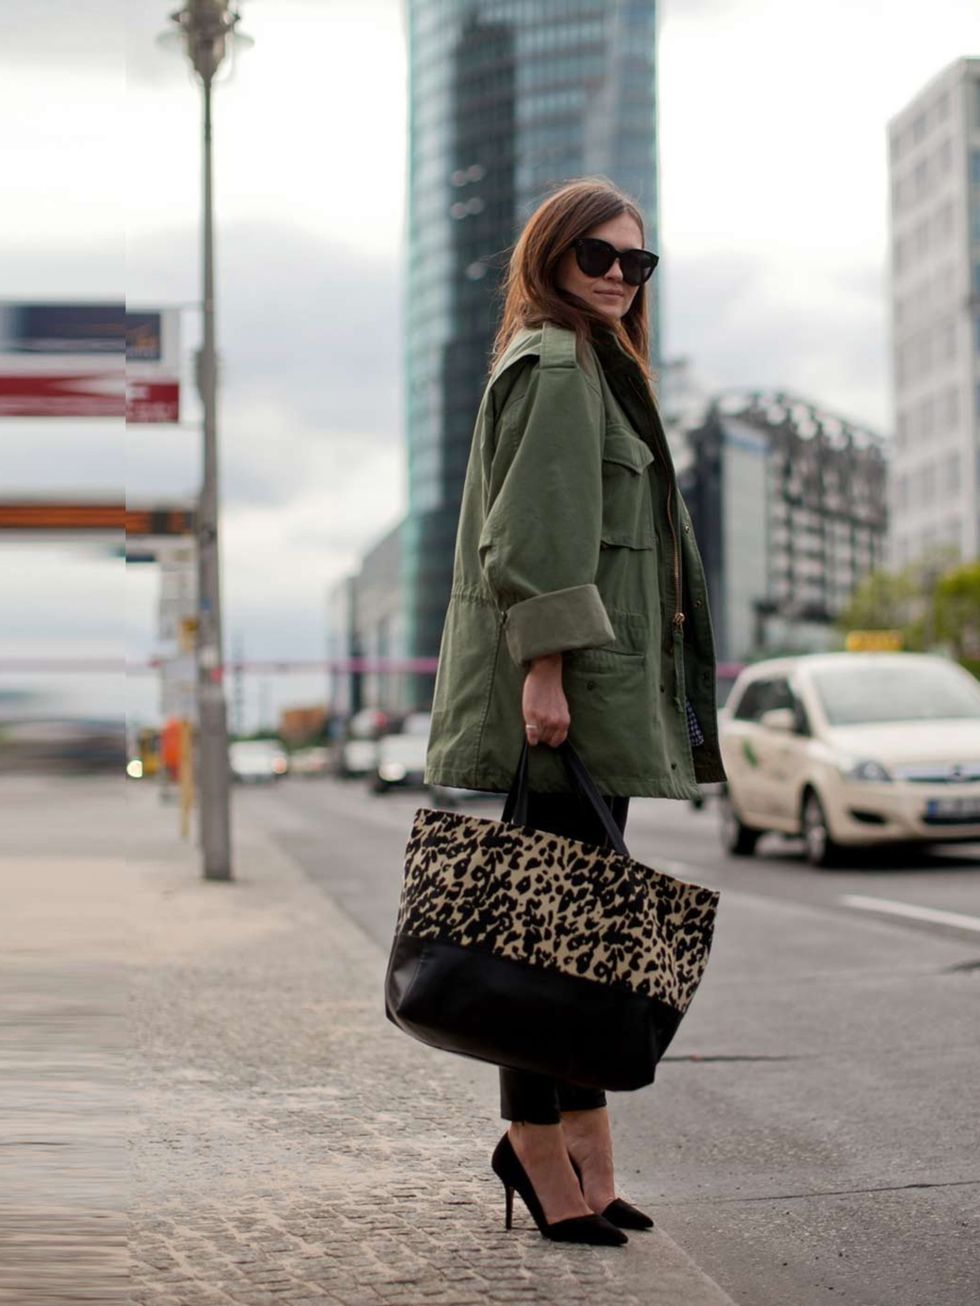 <p>Katja, Berlin</p><p>Coat from US miltar, Zara shoes, Celine bag and COS trouser</p><p><a href="http://www.elleuk.com/style/street-style/berlin-street-style"></a></p><p><em><a href="http://www.elleuk.com/style/street-style/best-of-spring-summer-2014-sho